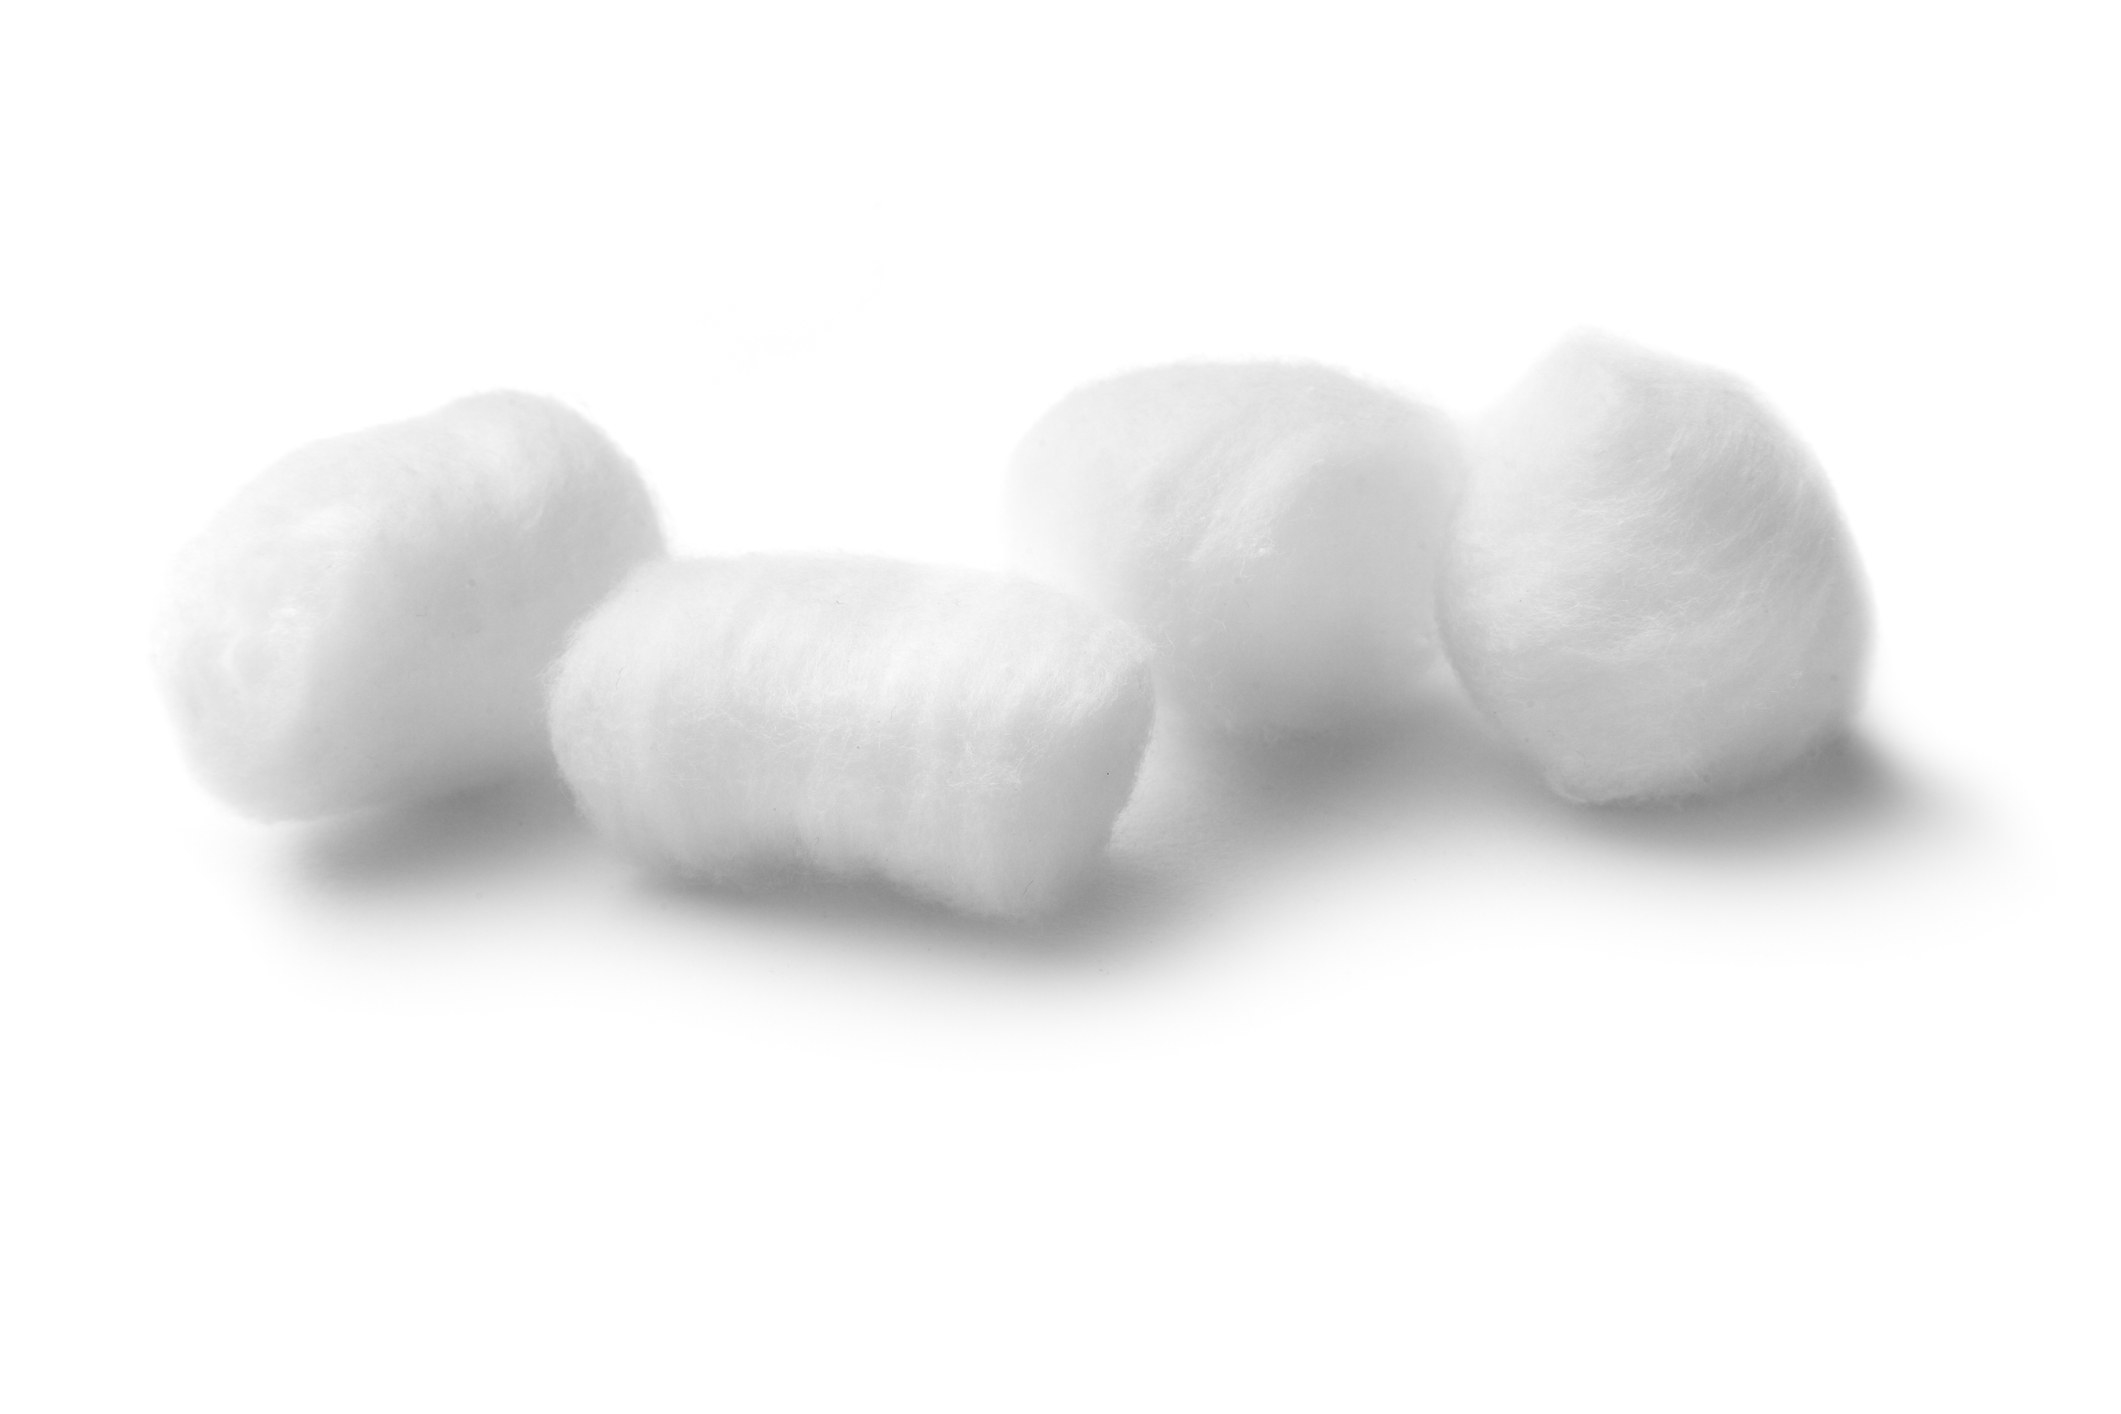 Close-up of four cotton balls